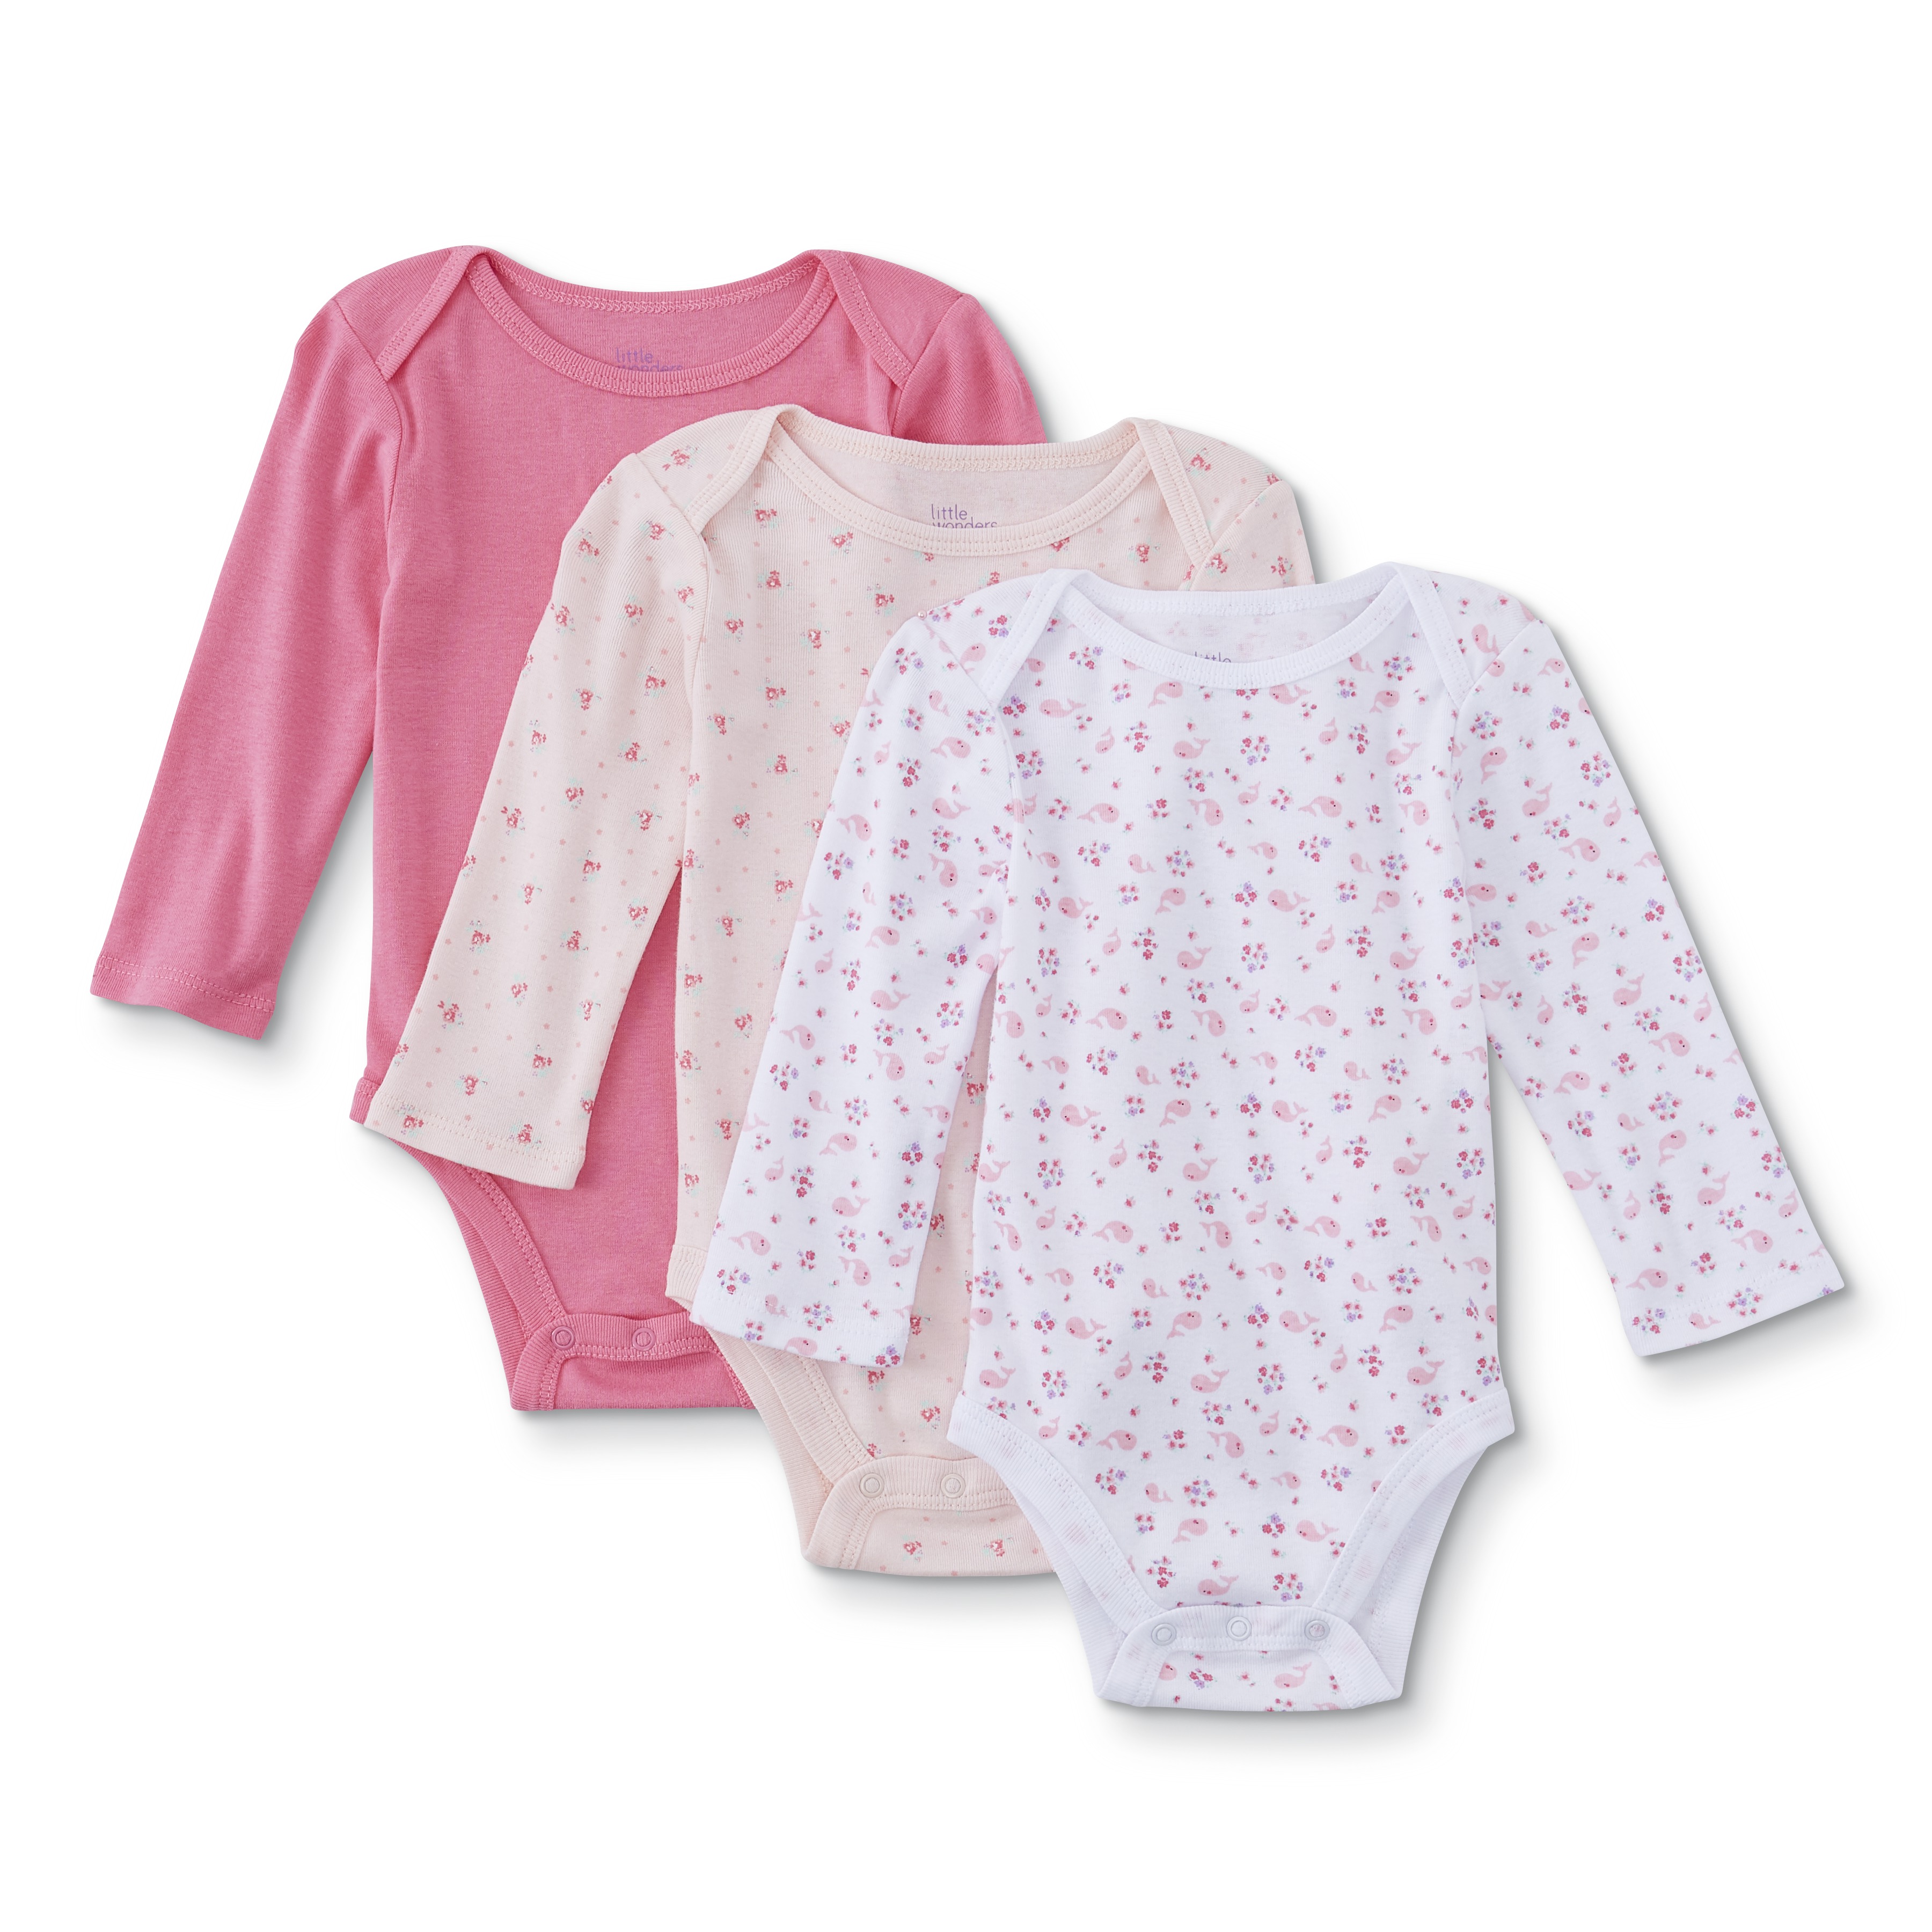 Little Wonders  Infant Girls' 3-Pack Long-Sleeve Bodysuits - Whale